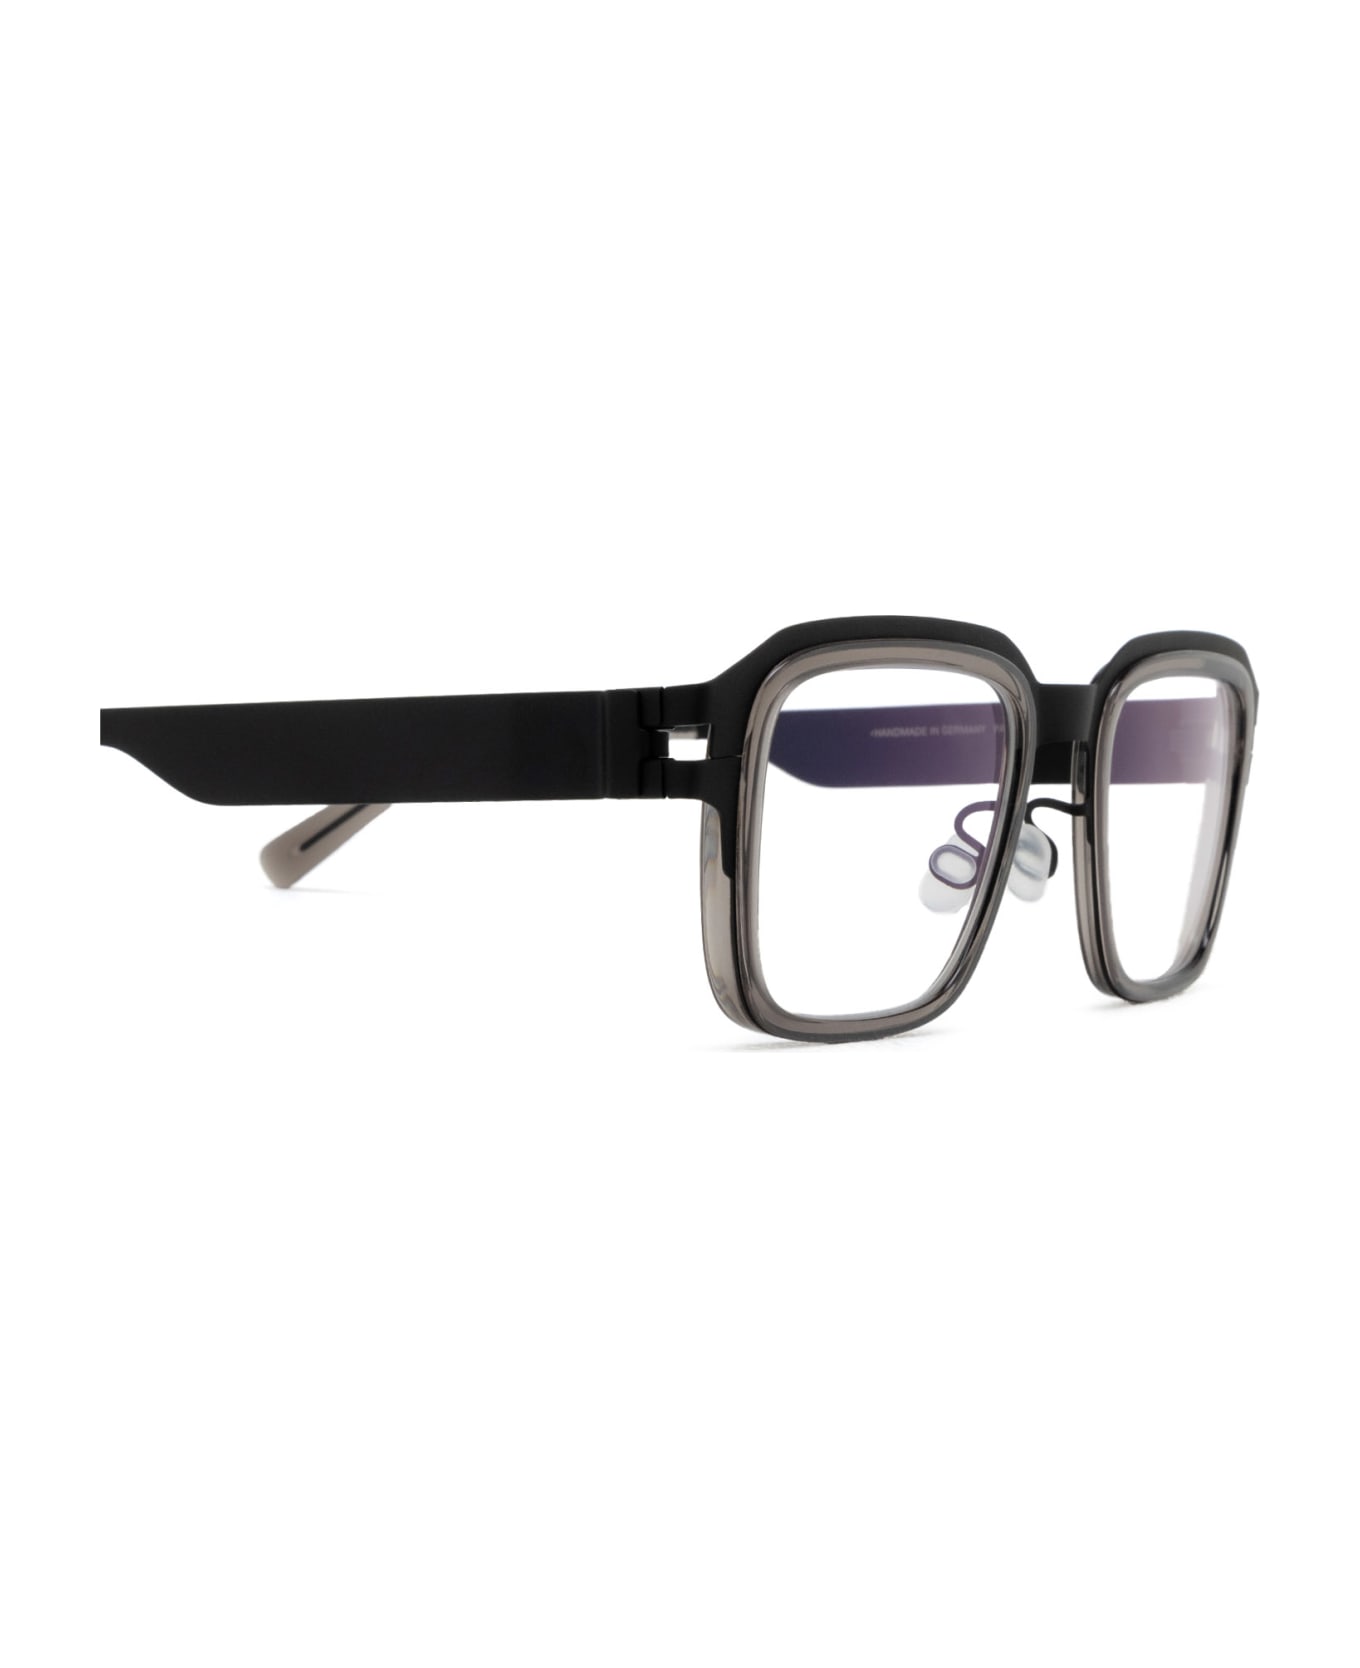 Mykita Kenton A77 Black/clear Ash Glasses - A77 Black/Clear Ash